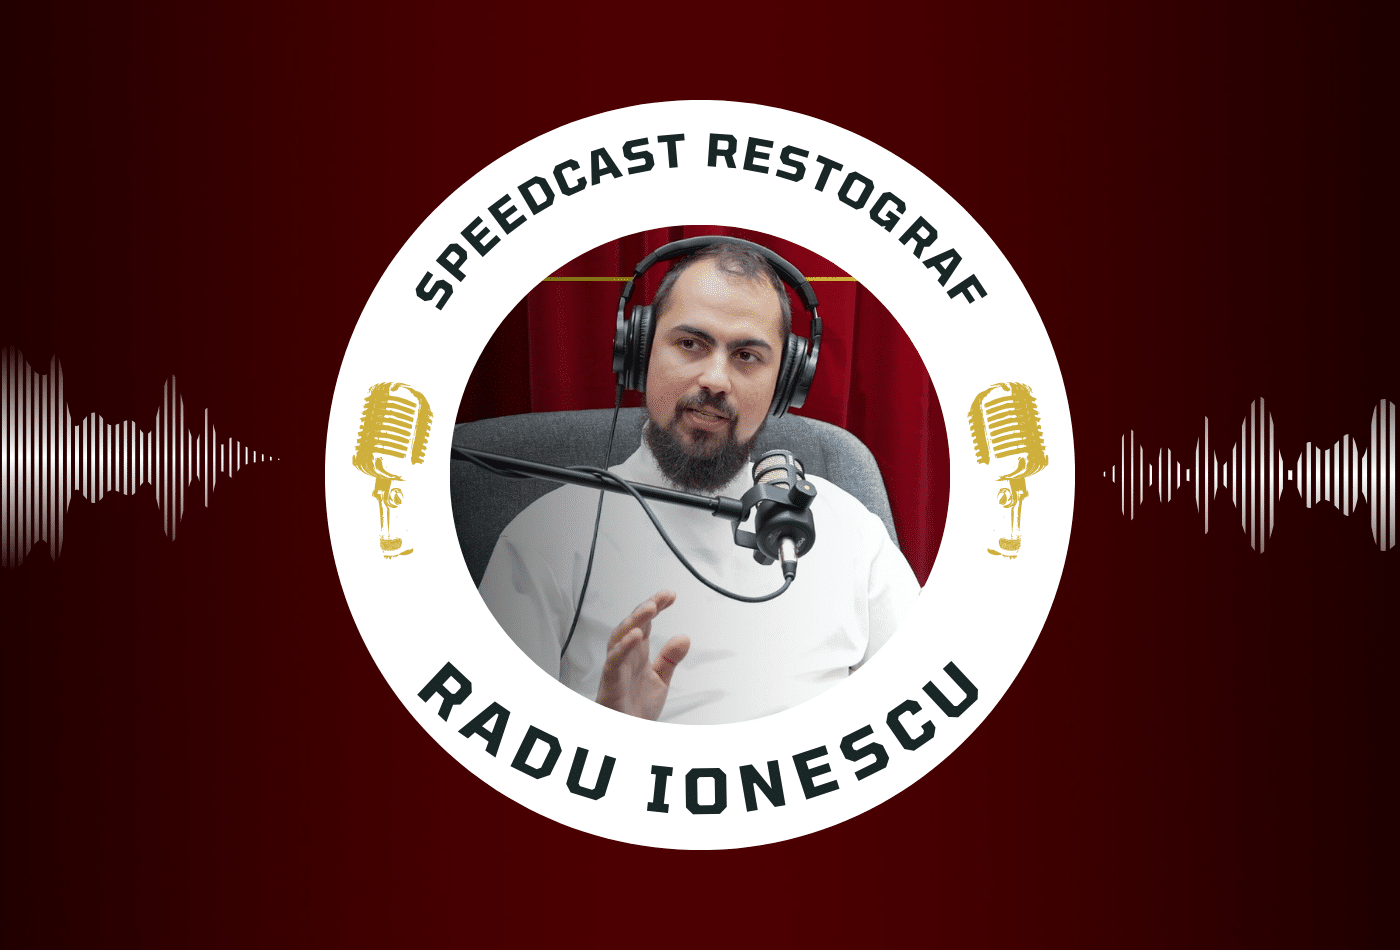 Speedcast Restograf #4, cu chef Radu Ionescu (Kaiamo)